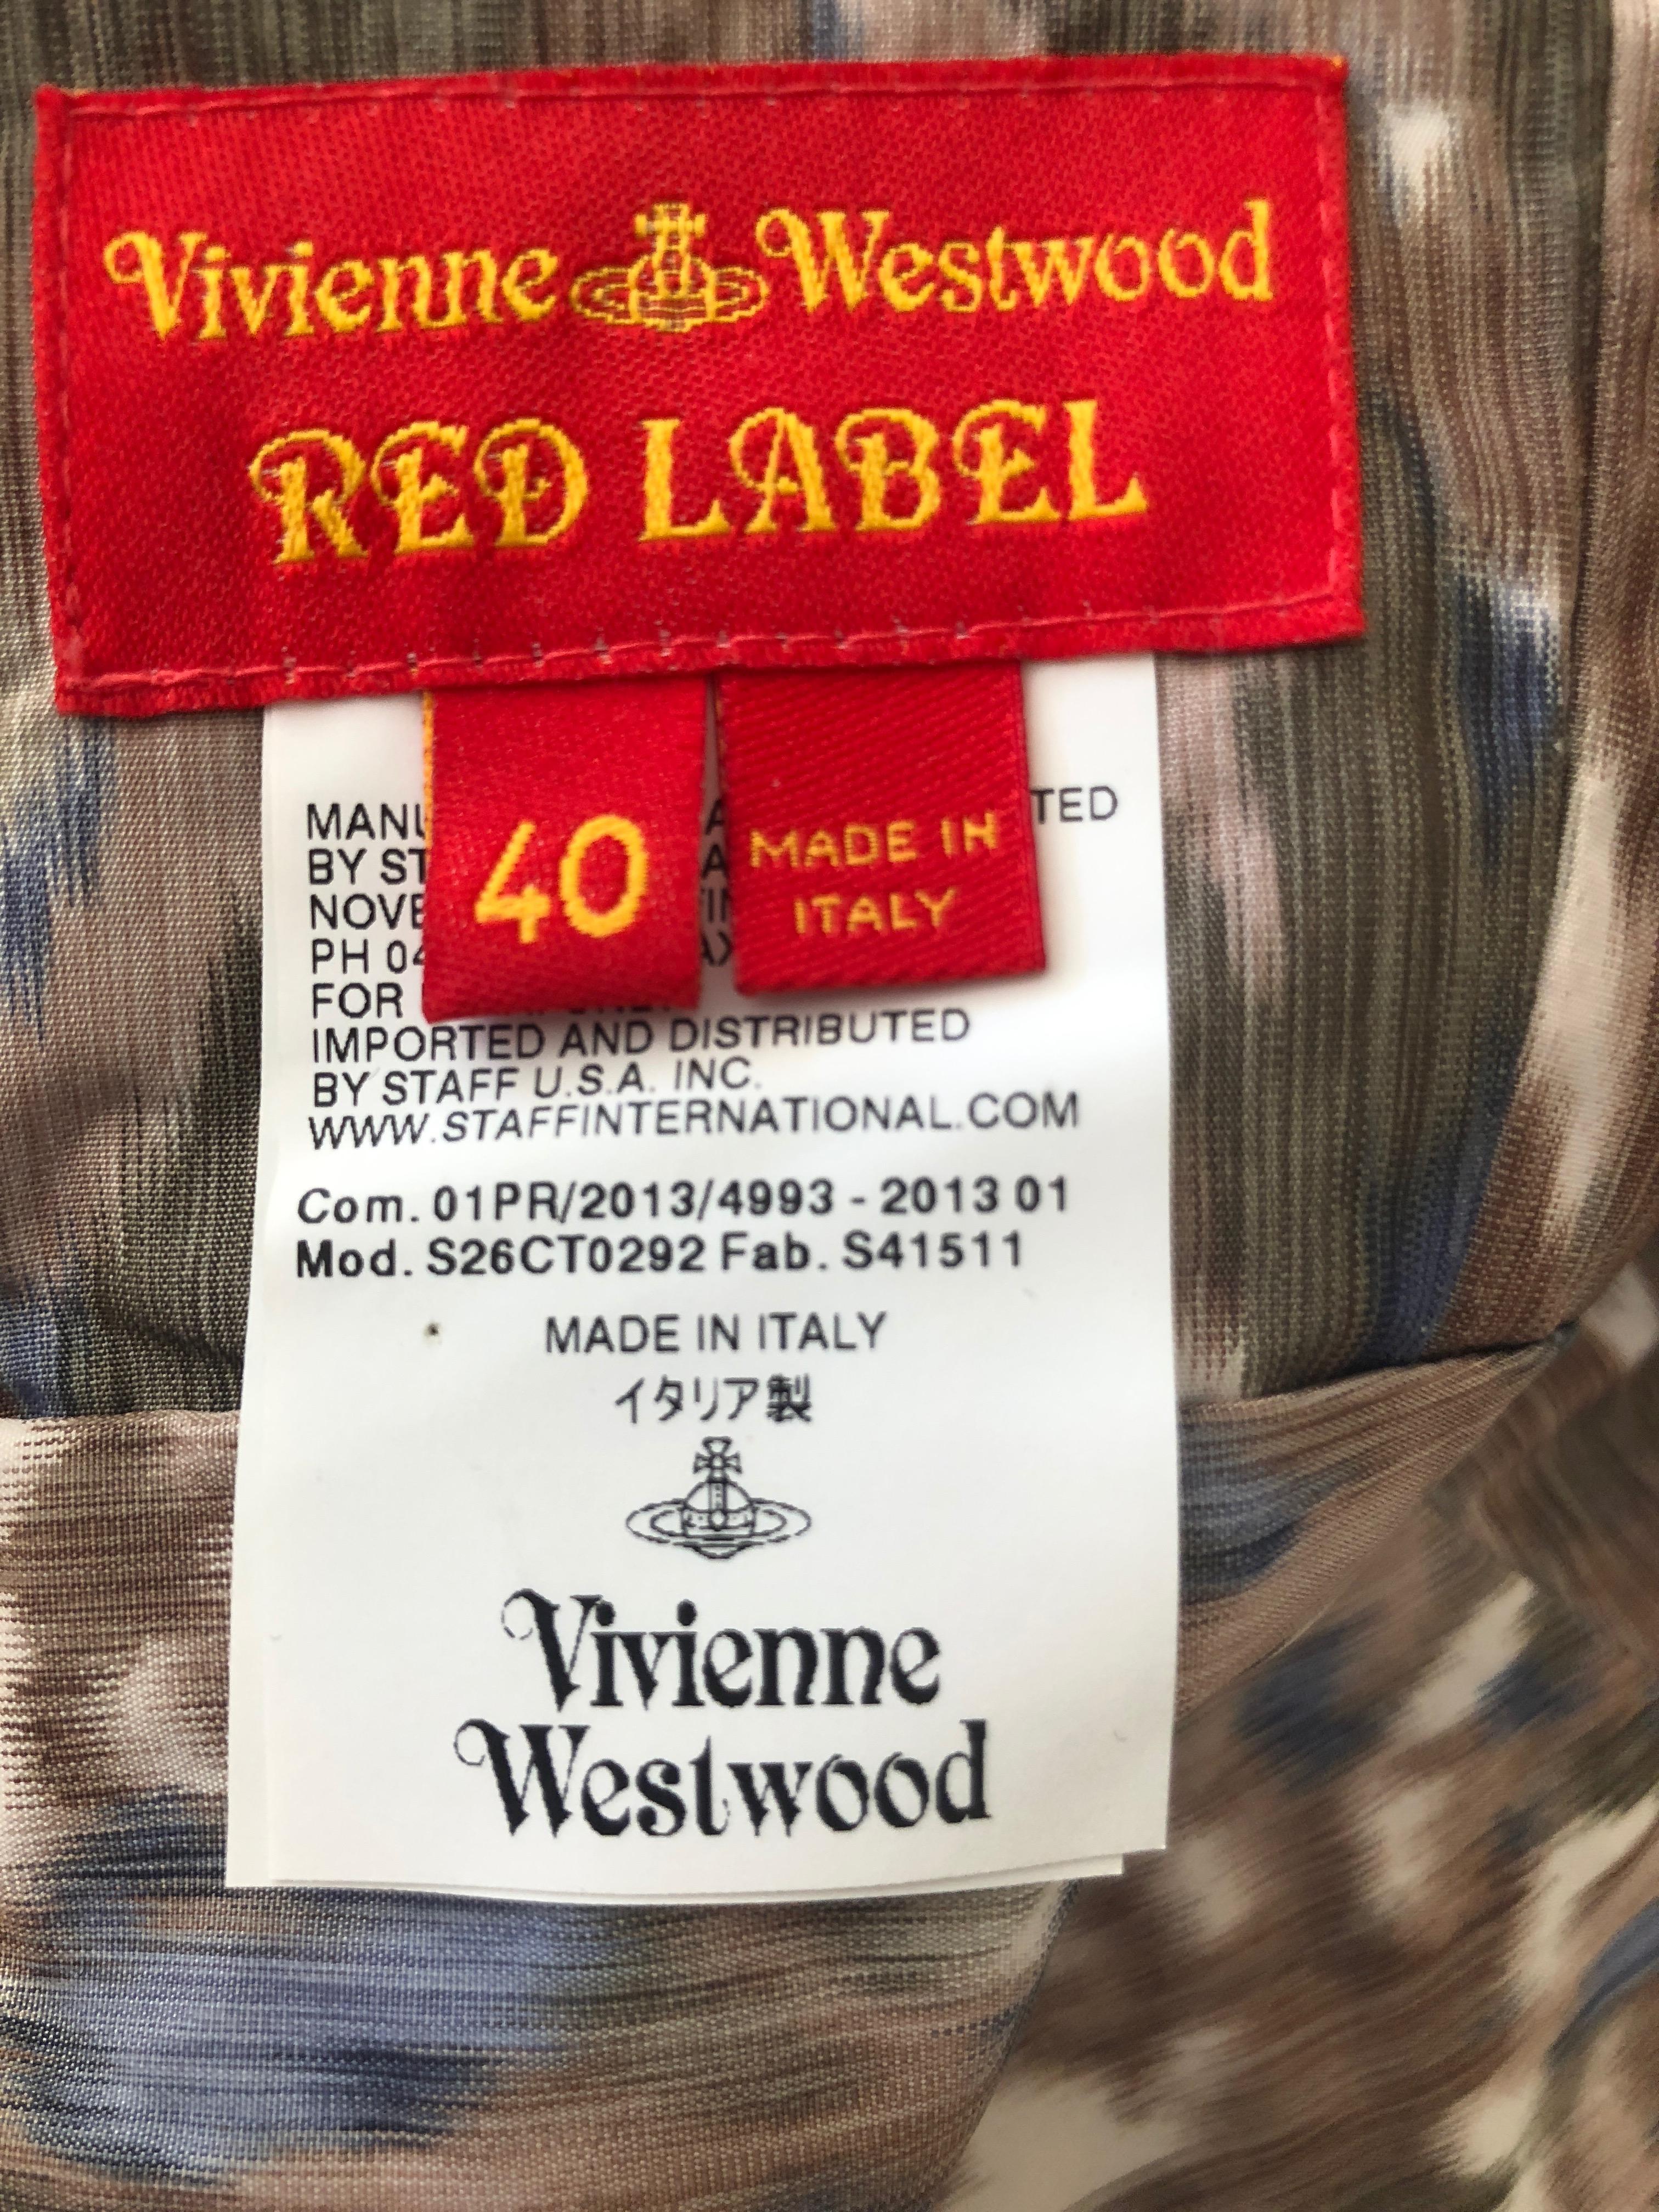 Vivienne Westwood Red Label Taffeta Floral Print 40's Style Dress   3